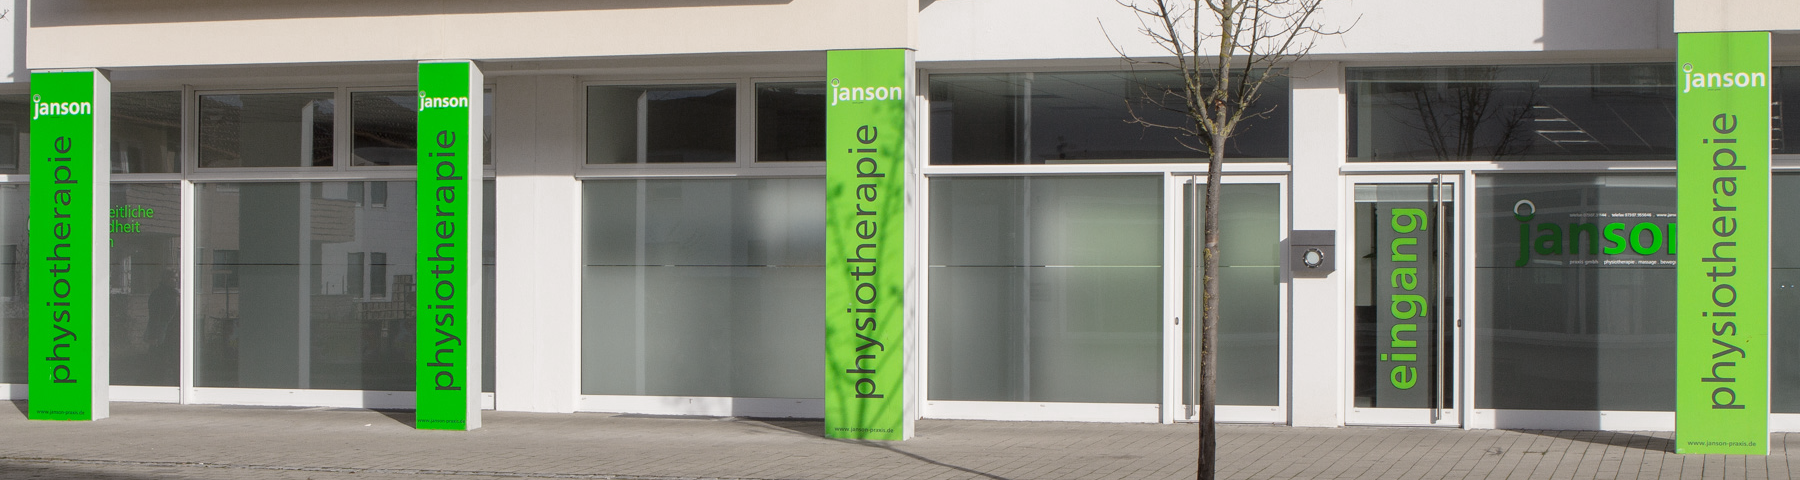 Janson Praxis GmbH